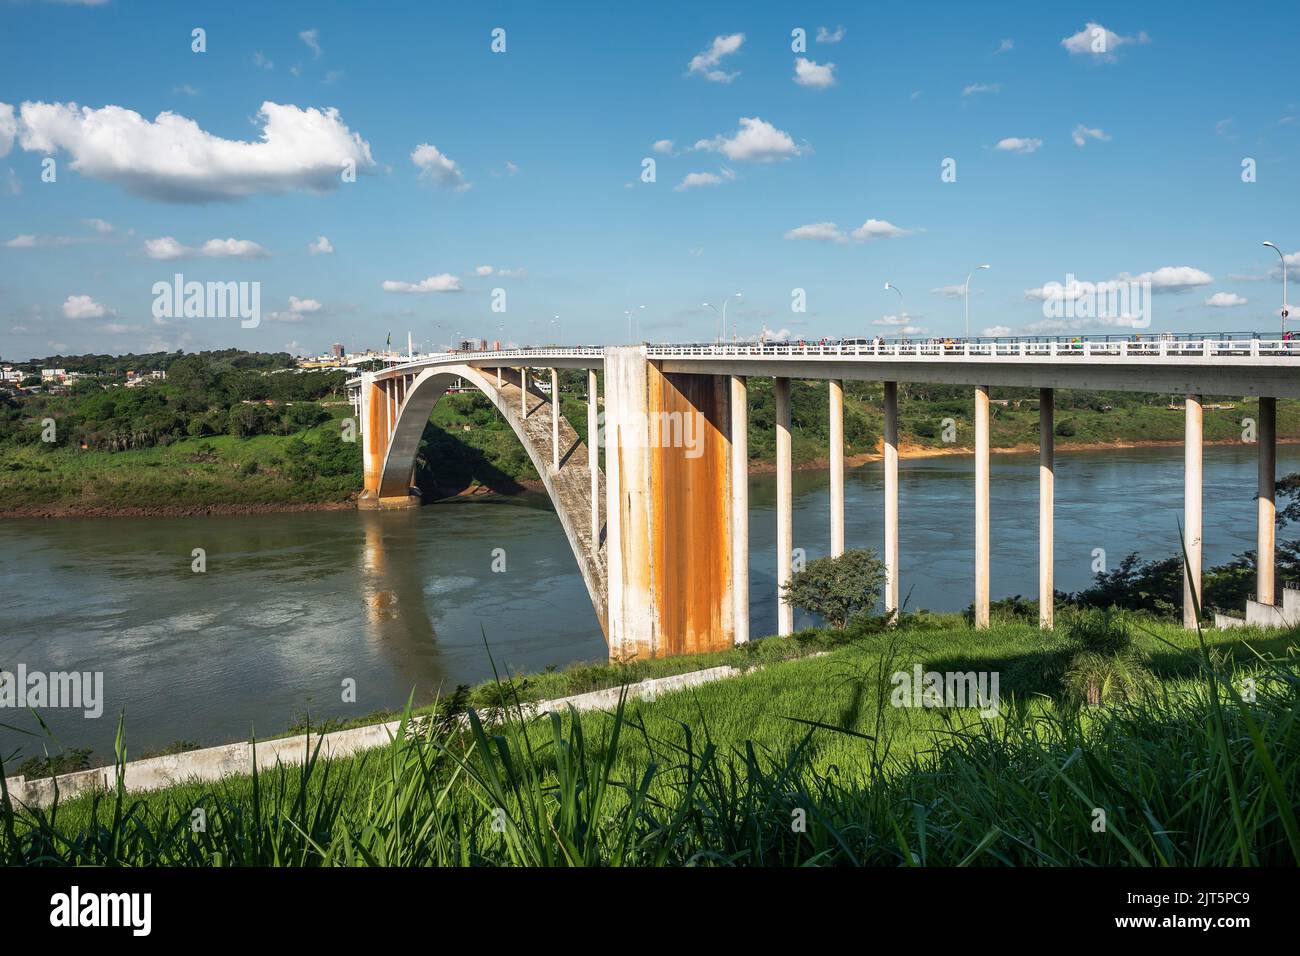 Friendship Bridge (Portuguese: Ponte da Amizade ) over the Parana river, connecting Foz do Iguacu, Brazil, to Ciudad del Este in Paraguay. Stock Photo